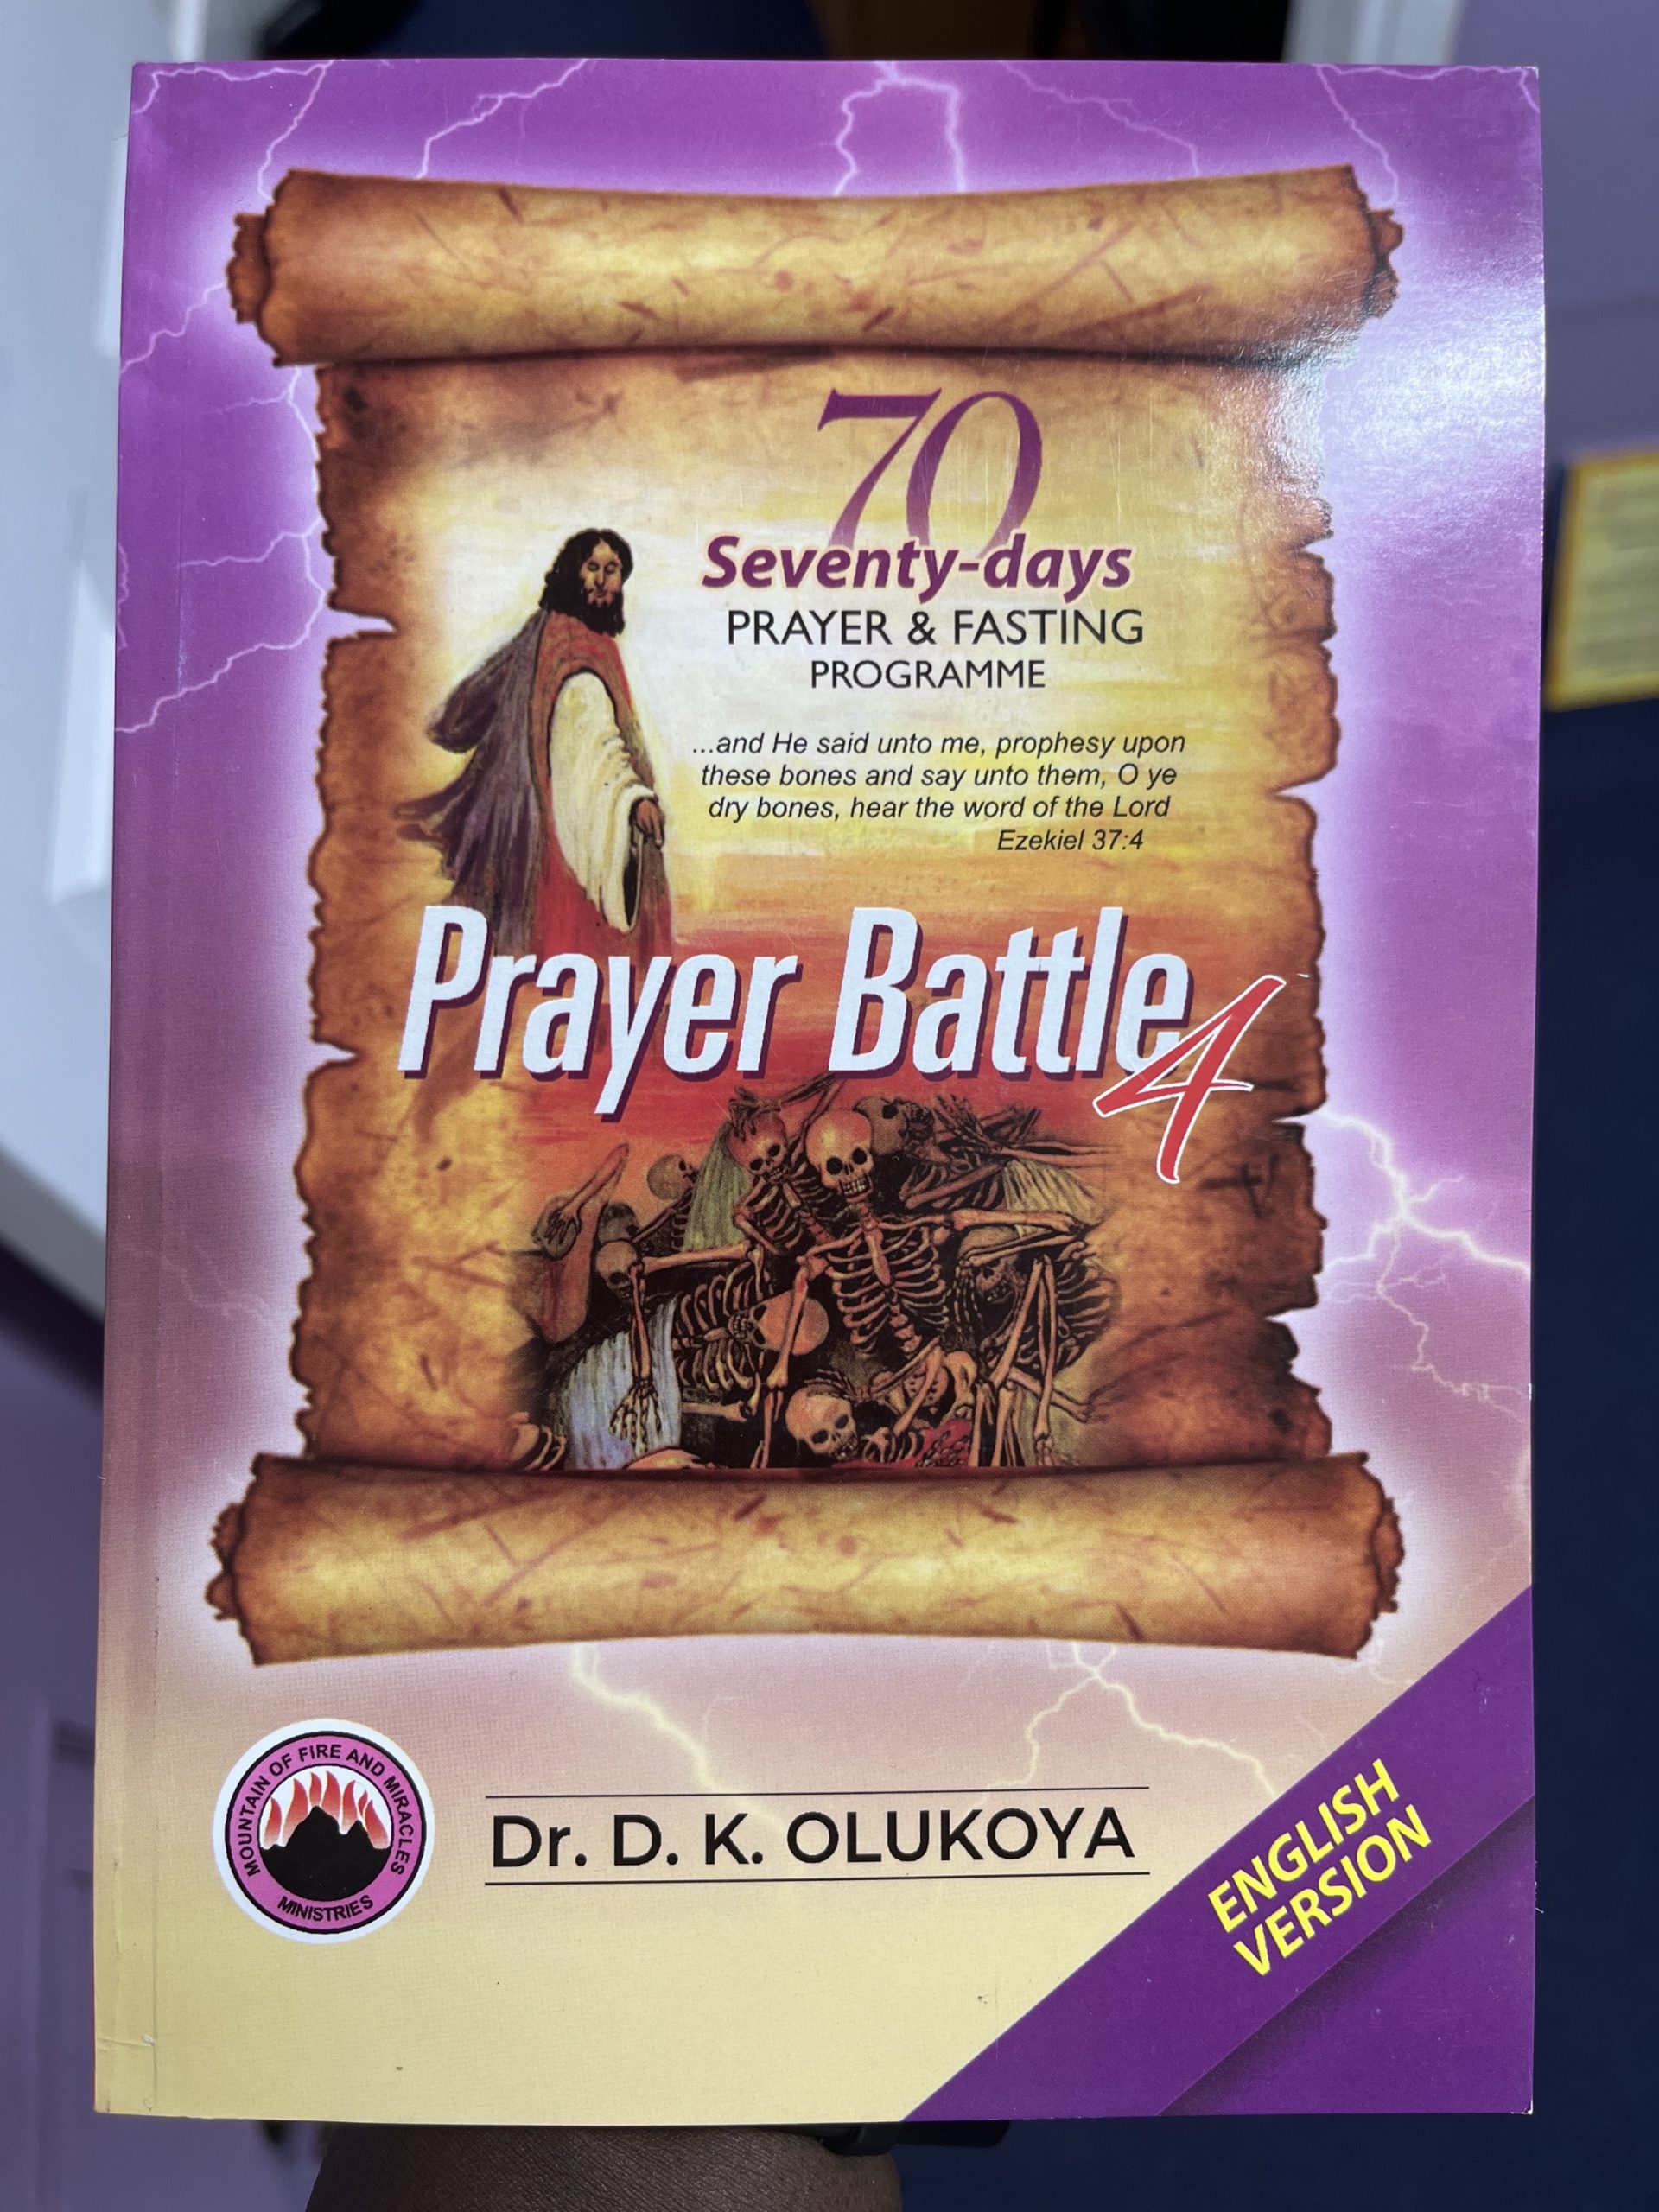 70 Days Prayer & Fasting Programme Book – Prayer Battle 4